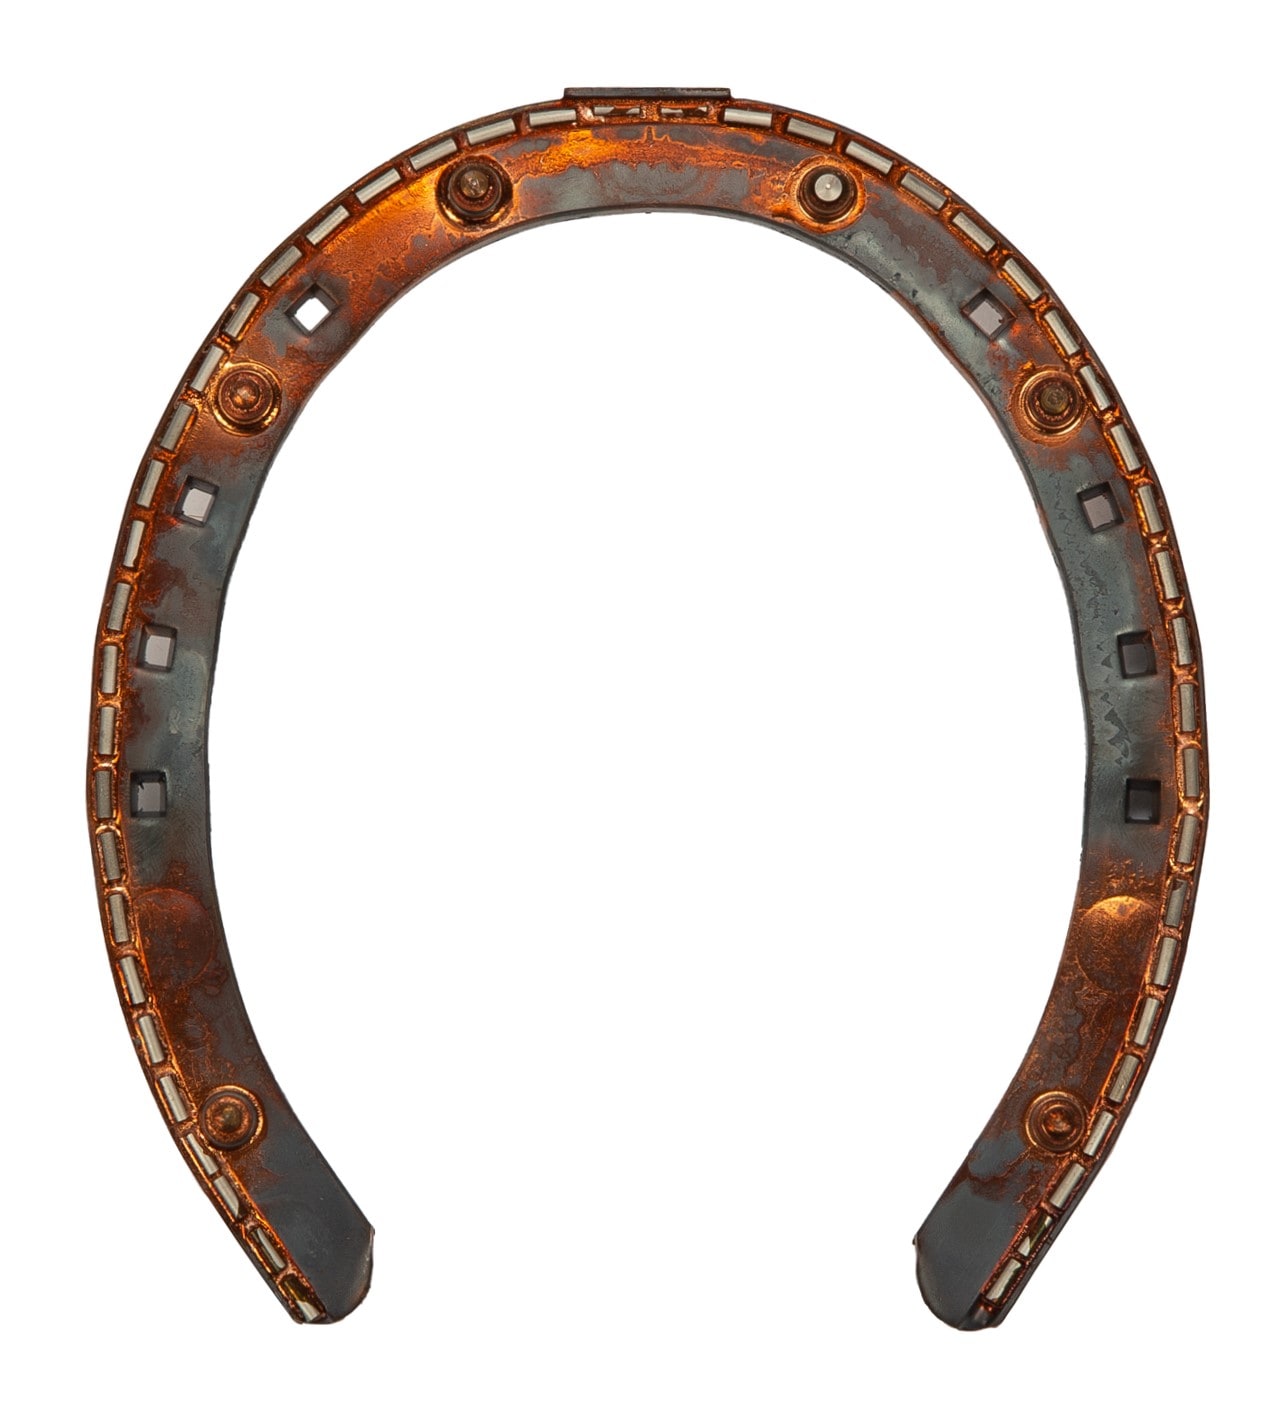 Hard metal horseshoe (goldshoe) 15x5, w/ 6 studs (4mm)